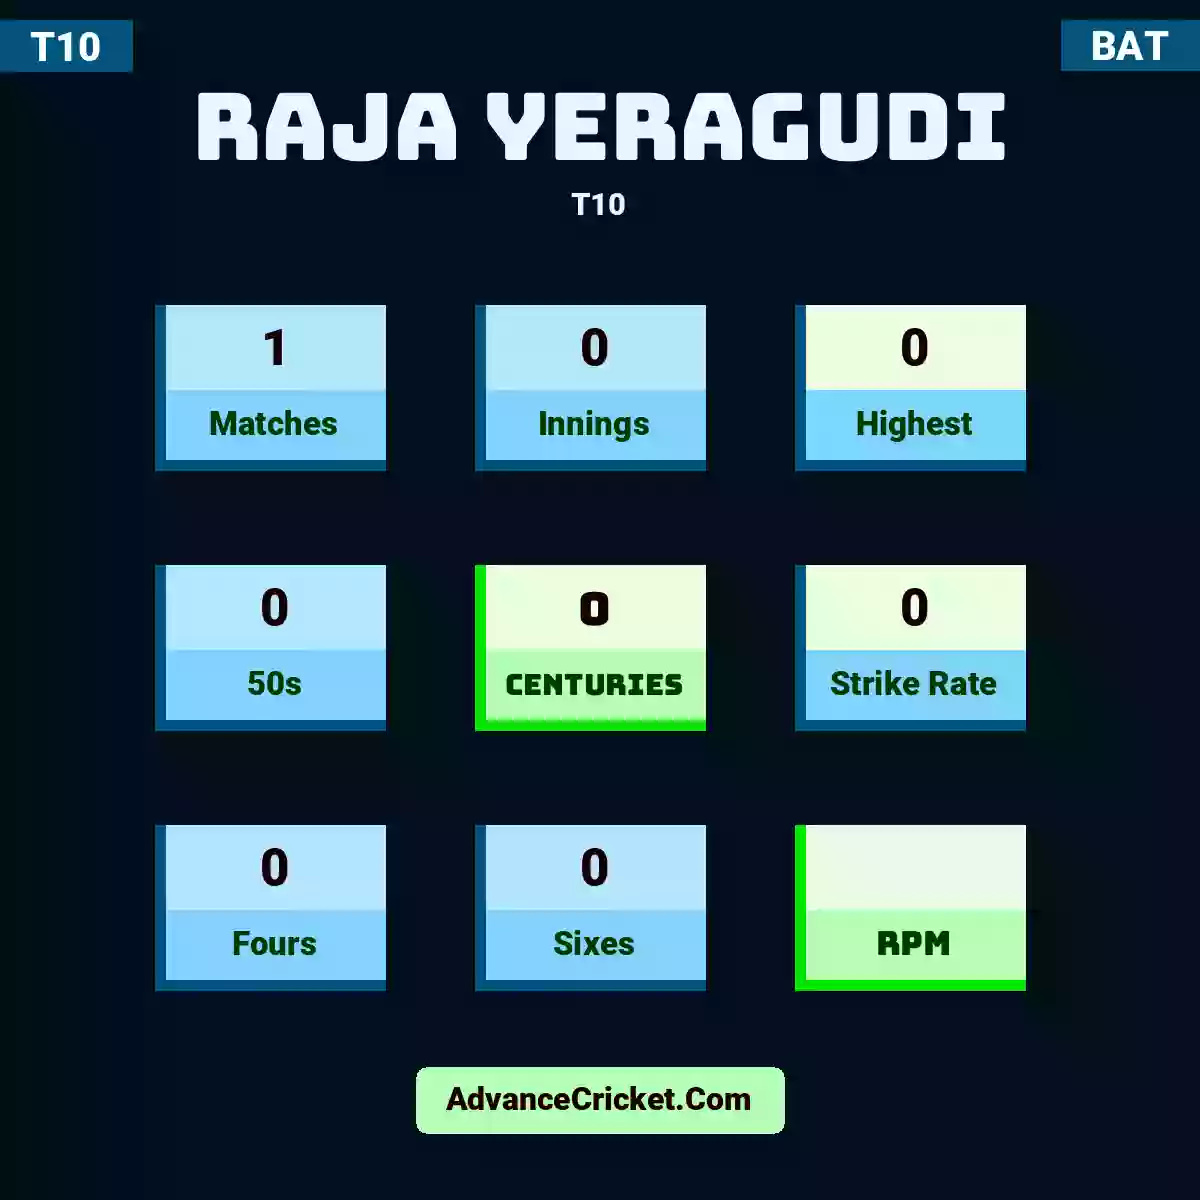 Raja Yeragudi T10 , Raja Yeragudi played 1 matches, scored 0 runs as highest, 0 half-centuries, and 0 centuries, with a strike rate of 0. R.Yeragudi hit 0 fours and 0 sixes.